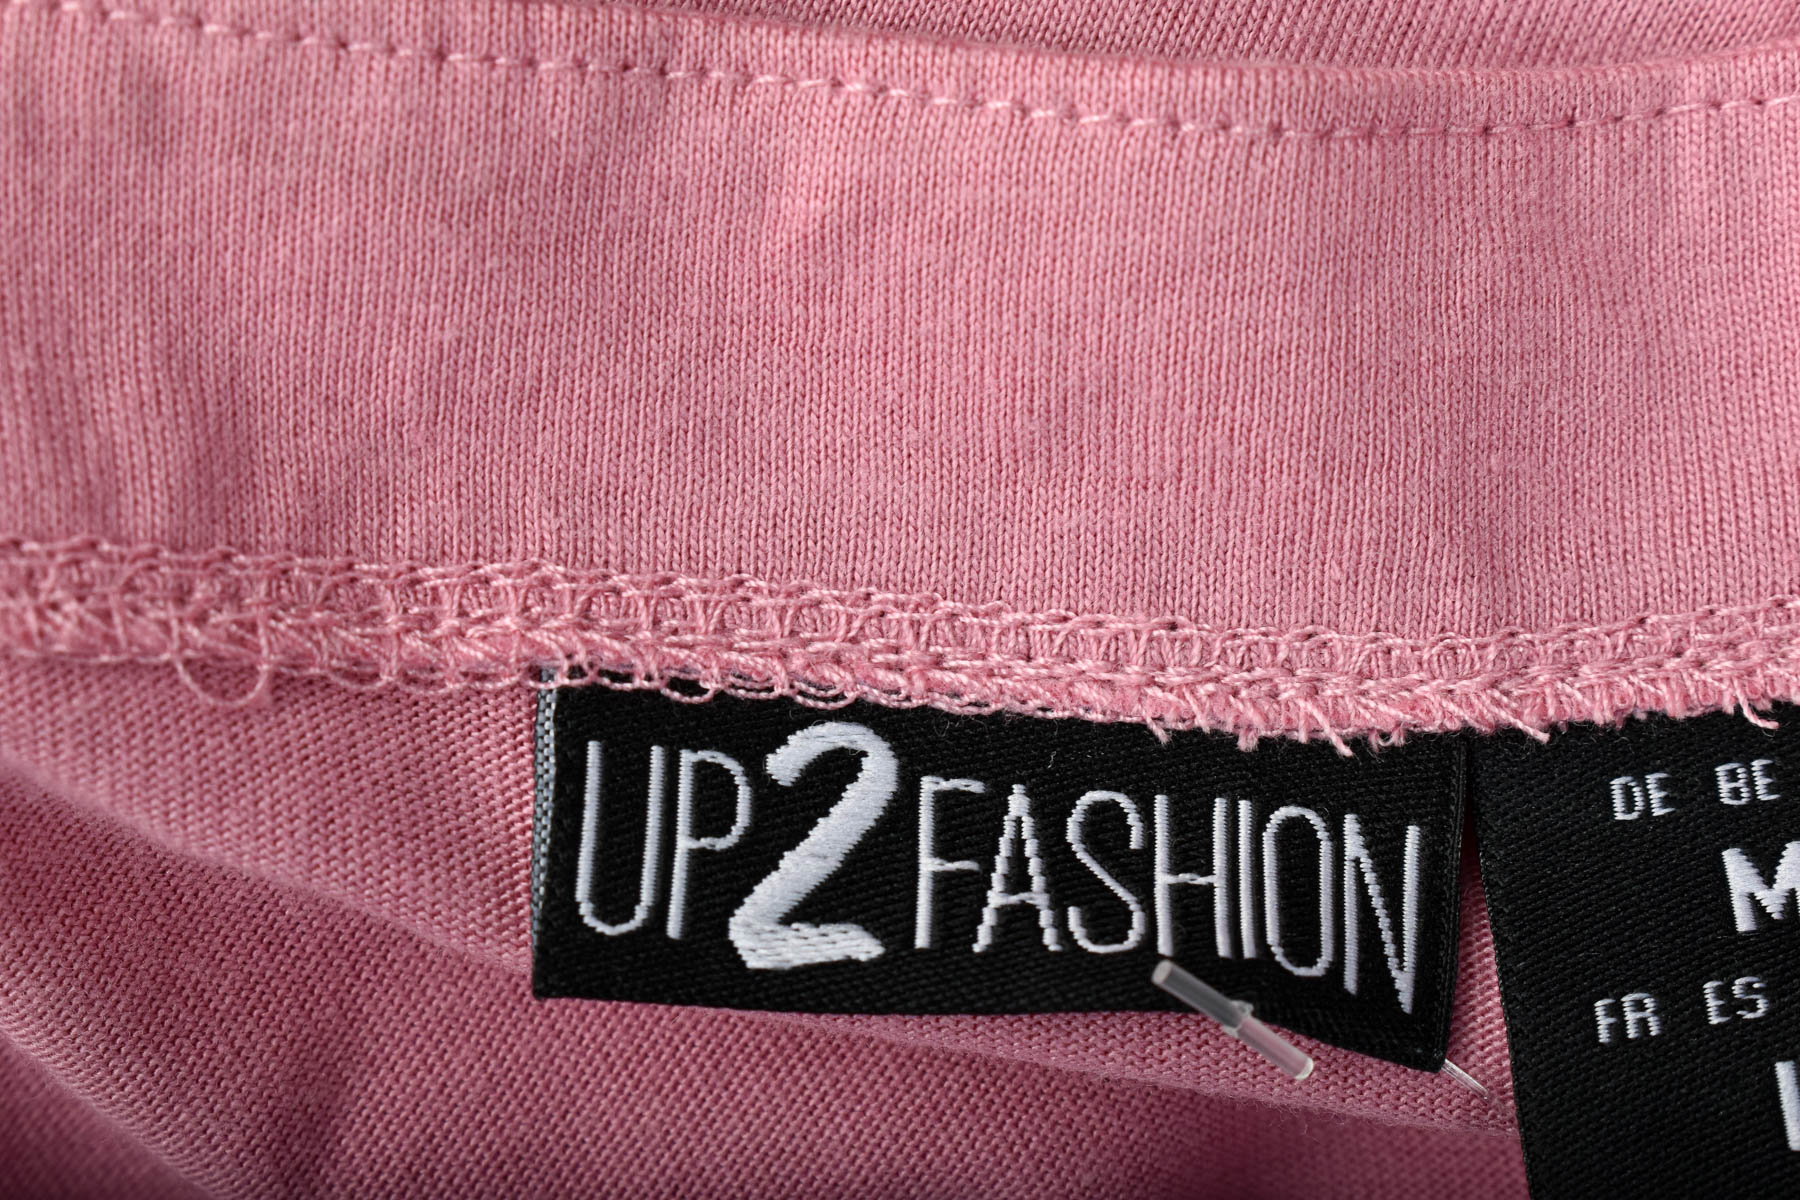 Women's blouse - Up 2 Fashion - 2